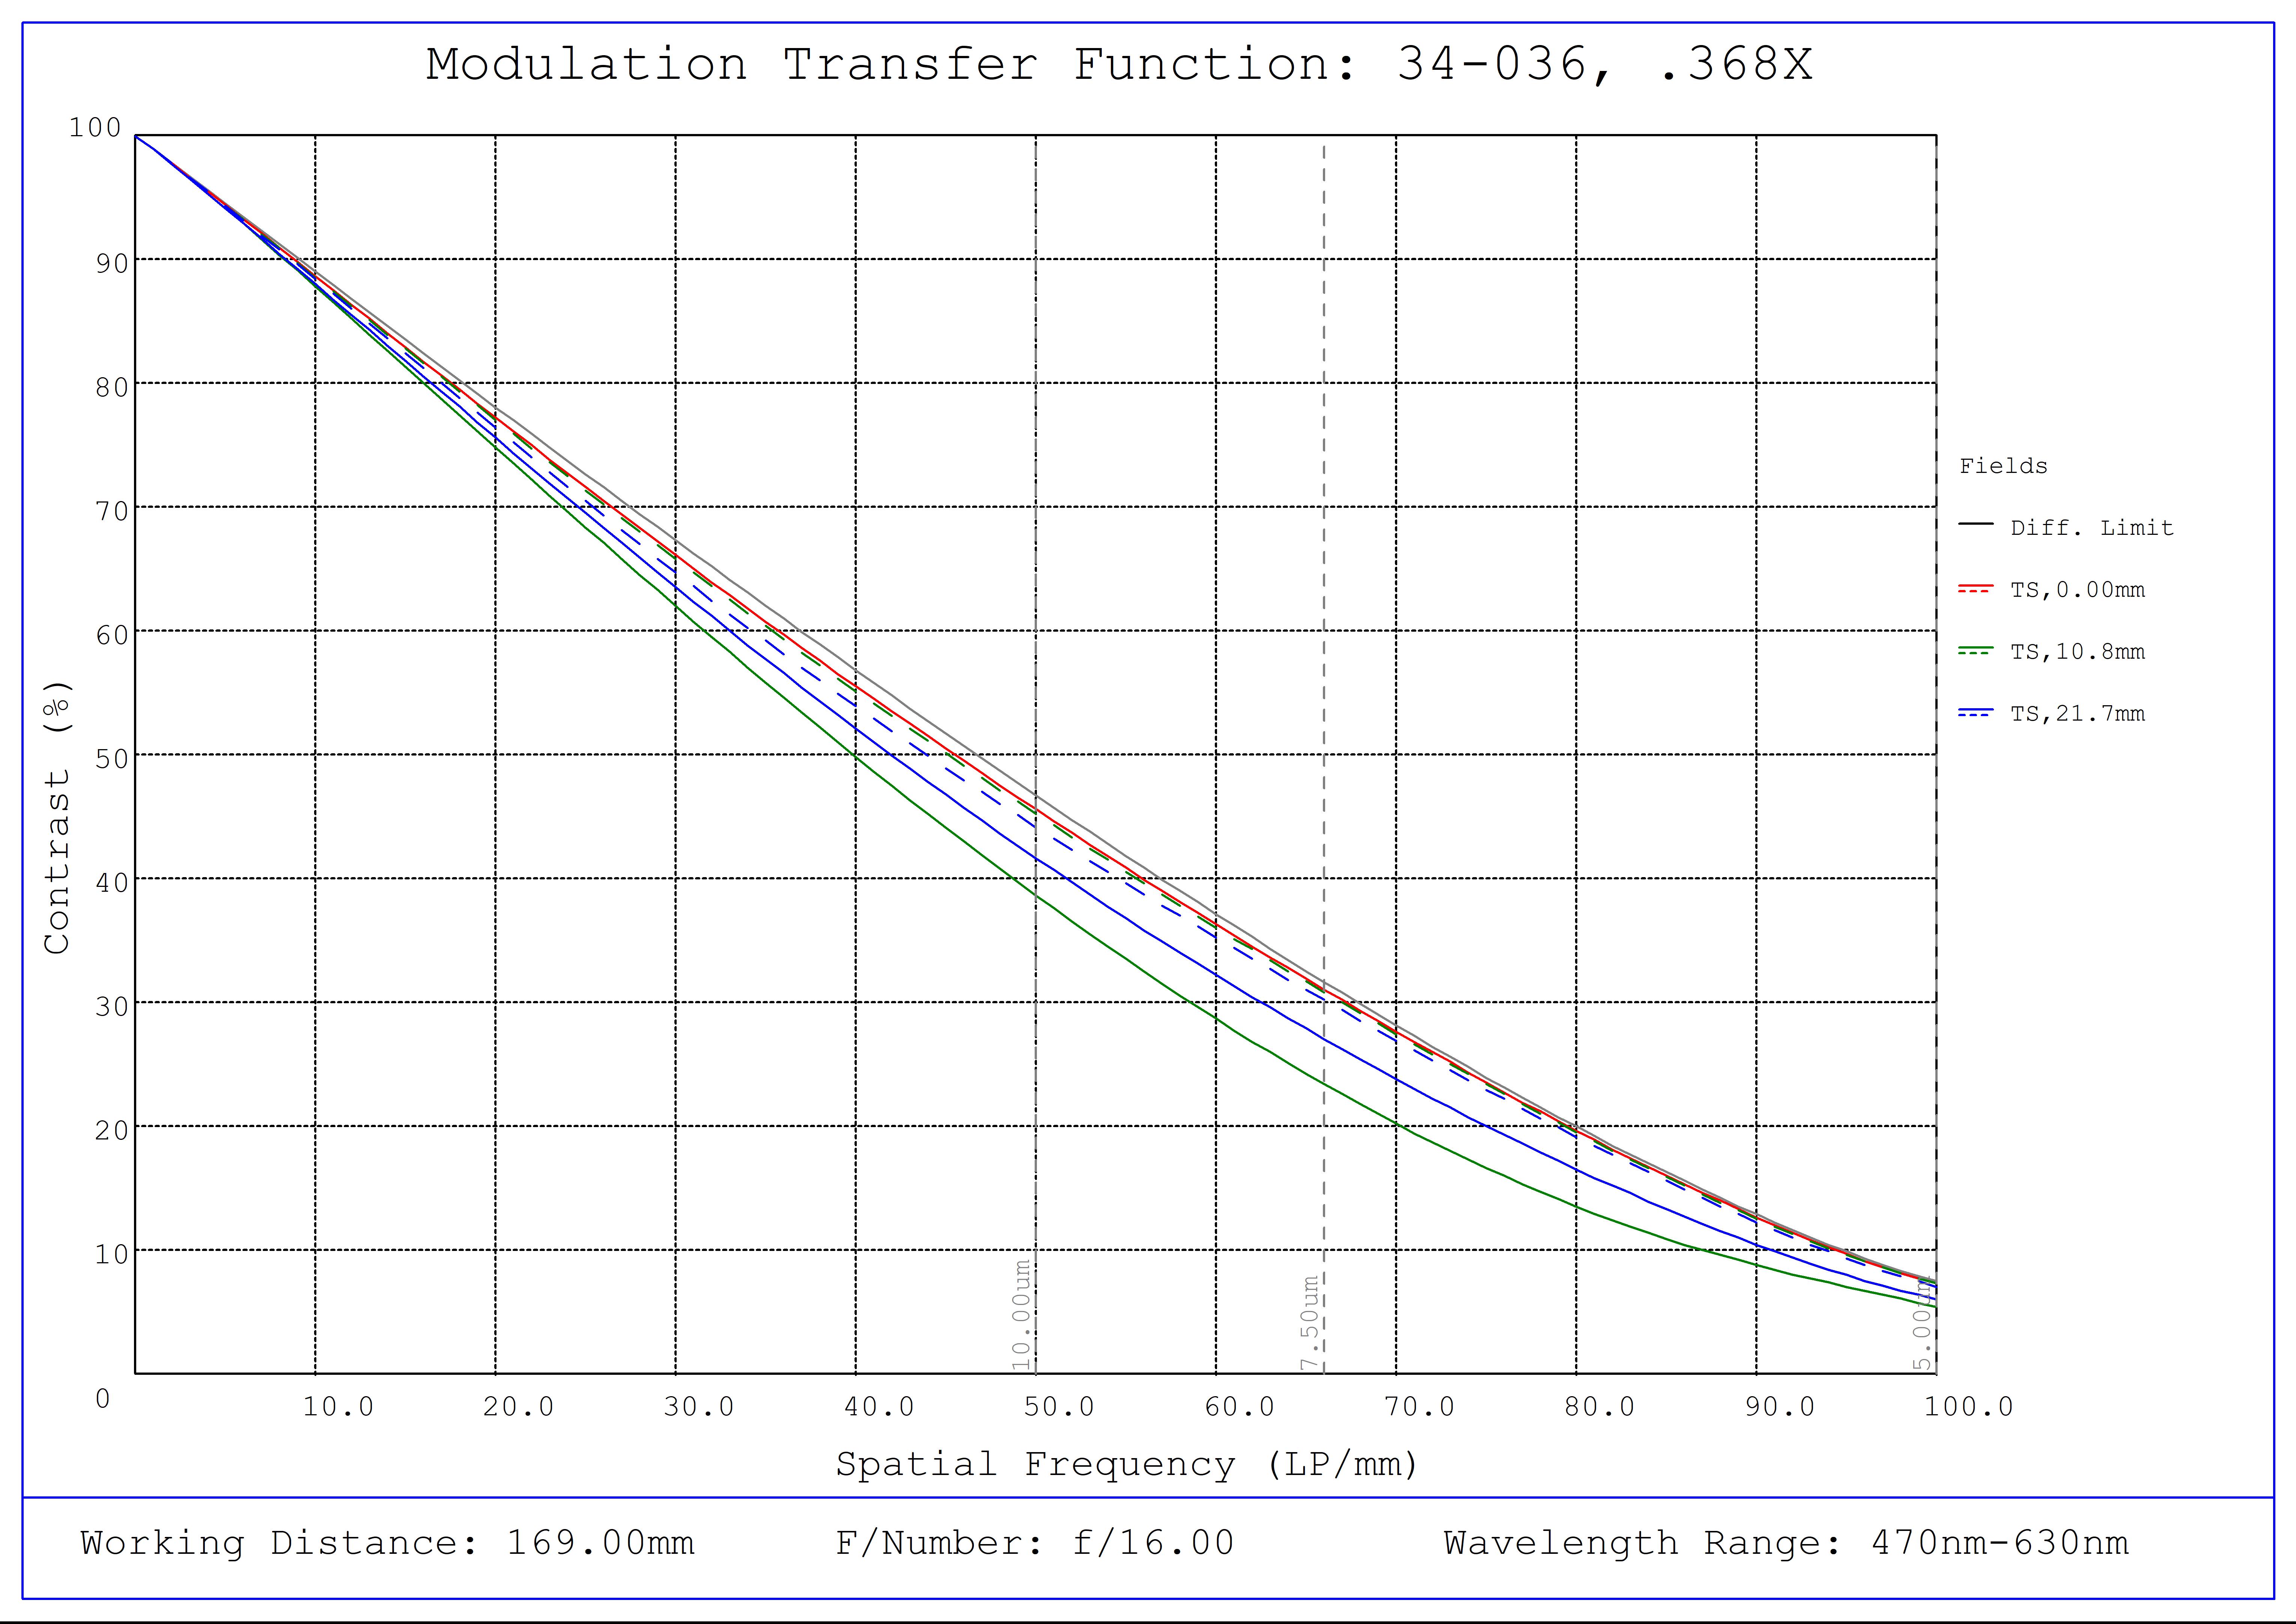 #34-036, 0.368X, 35mm M58 x 0.75 TitanTL® Telecentric Lens, Modulated Transfer Function (MTF) Plot, 169mm Working Distance, f16